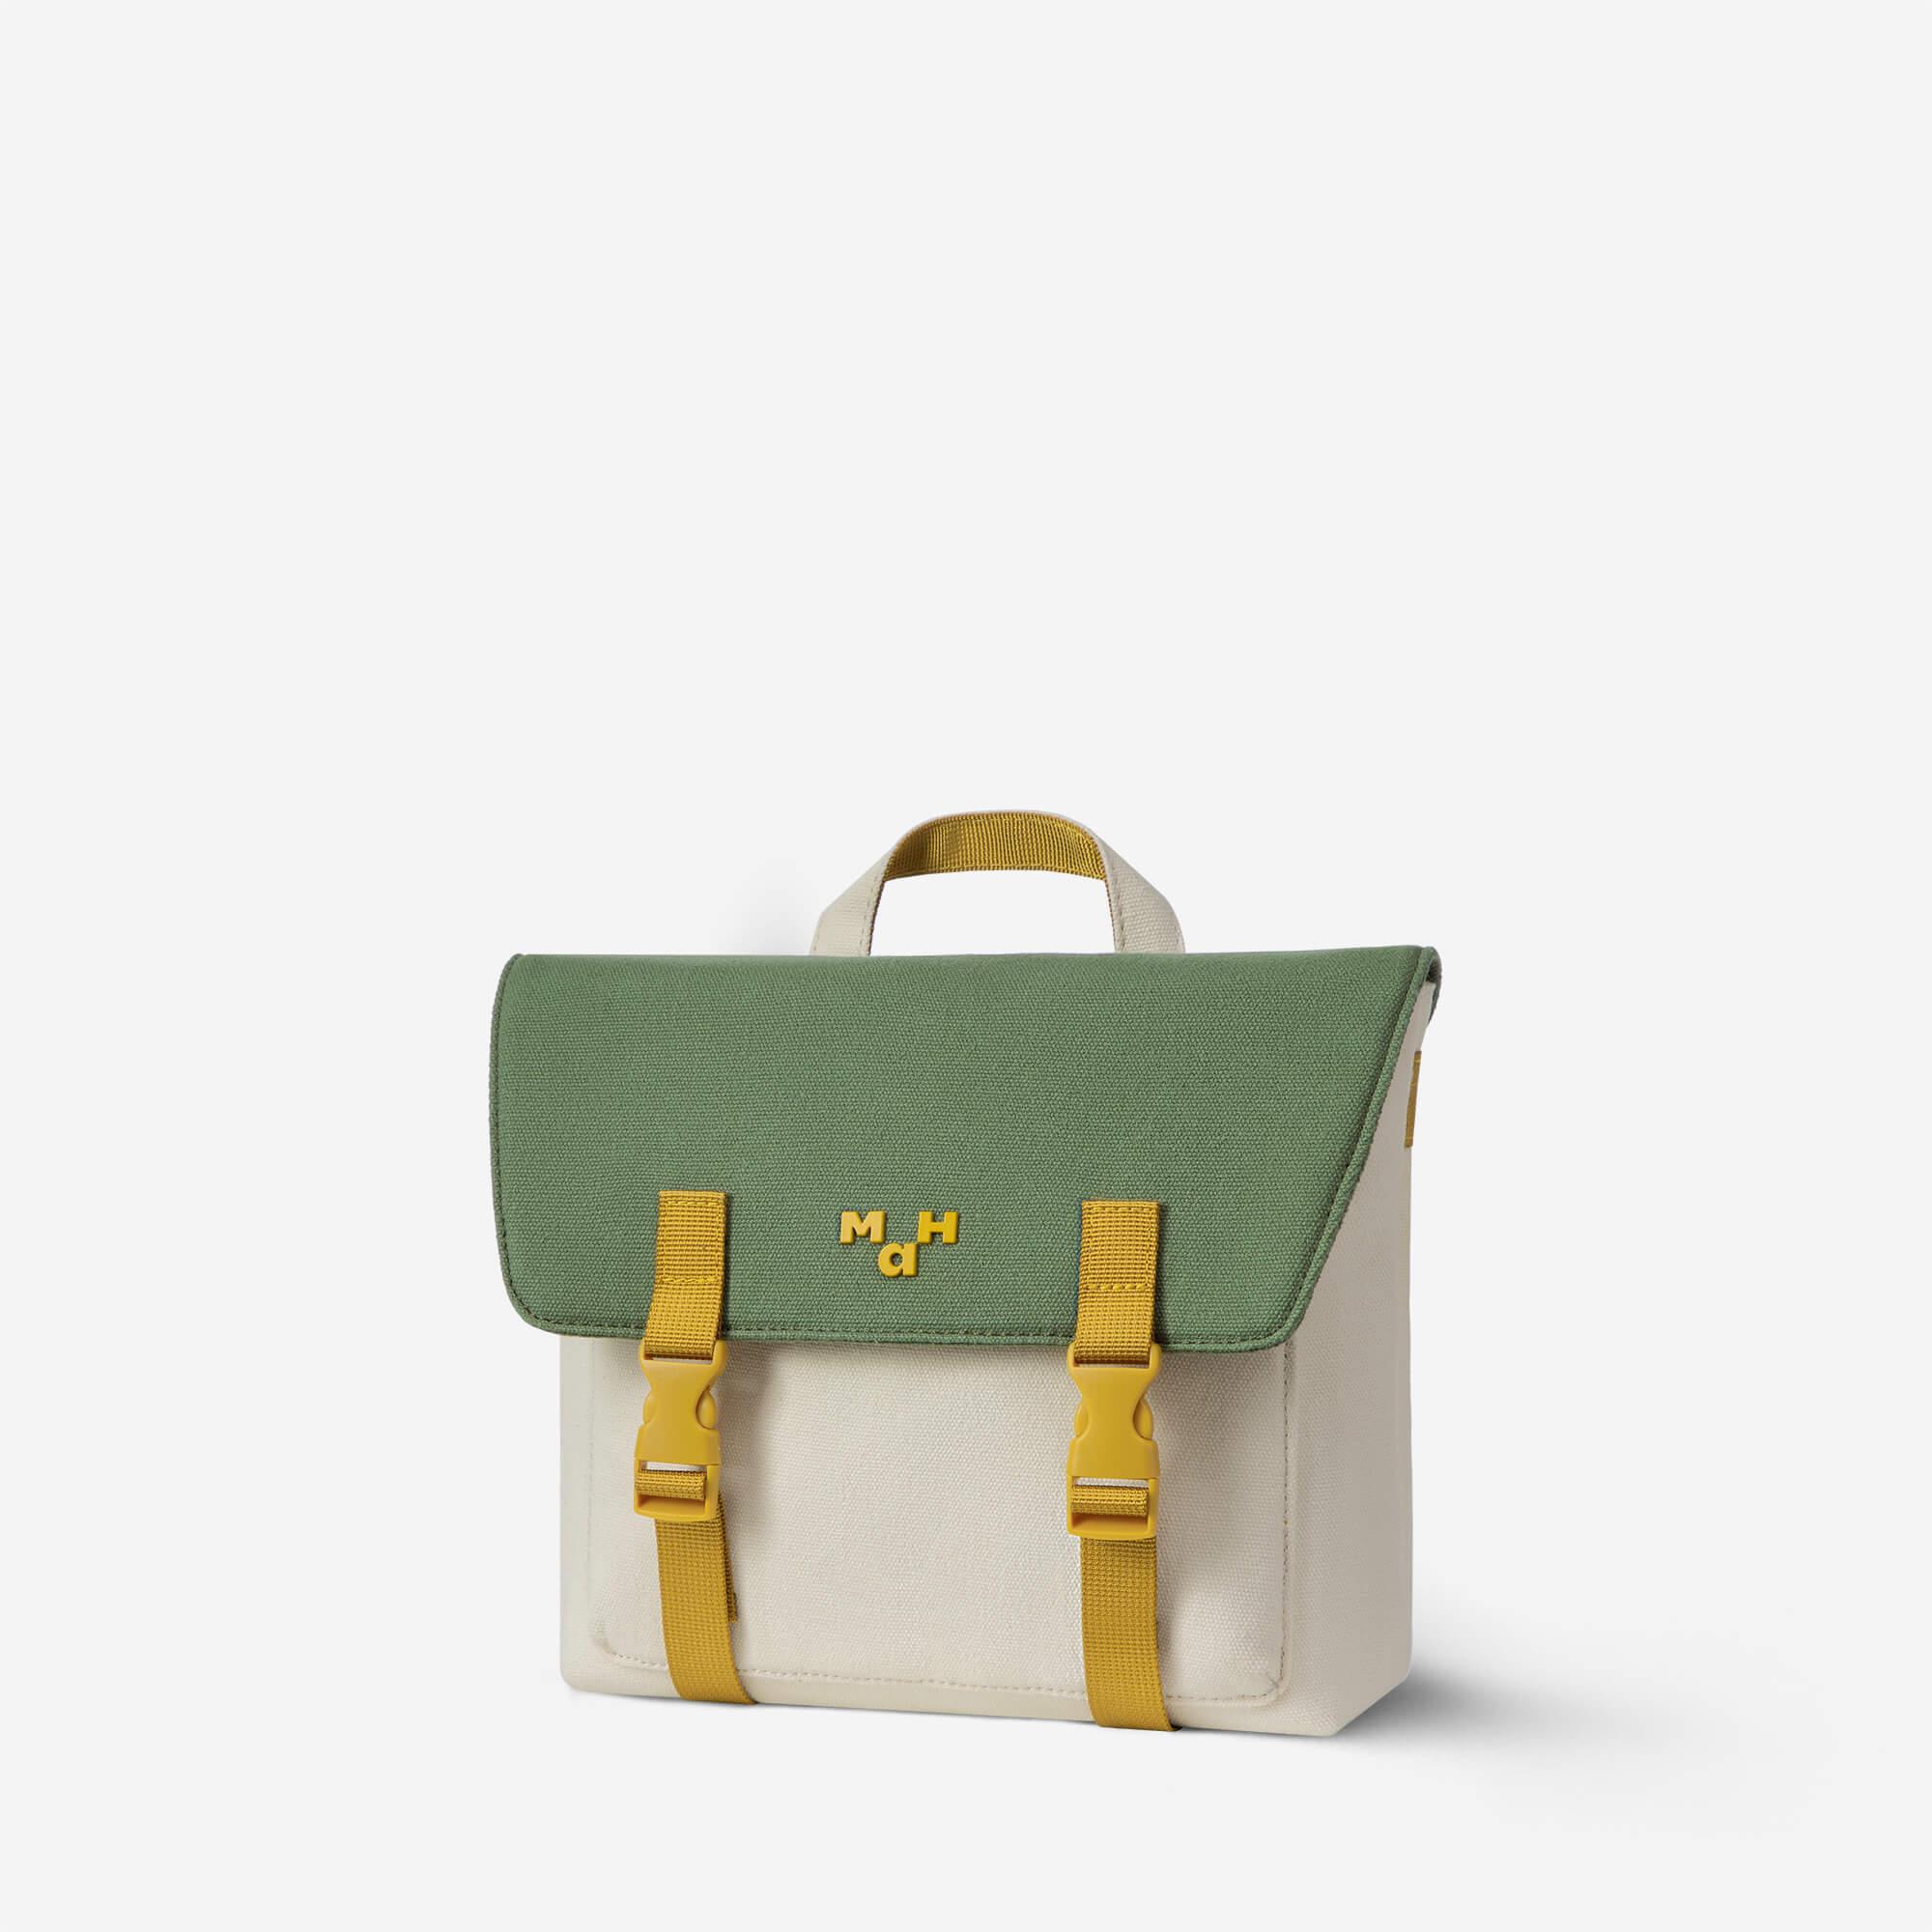 Small Backpack and Handbag